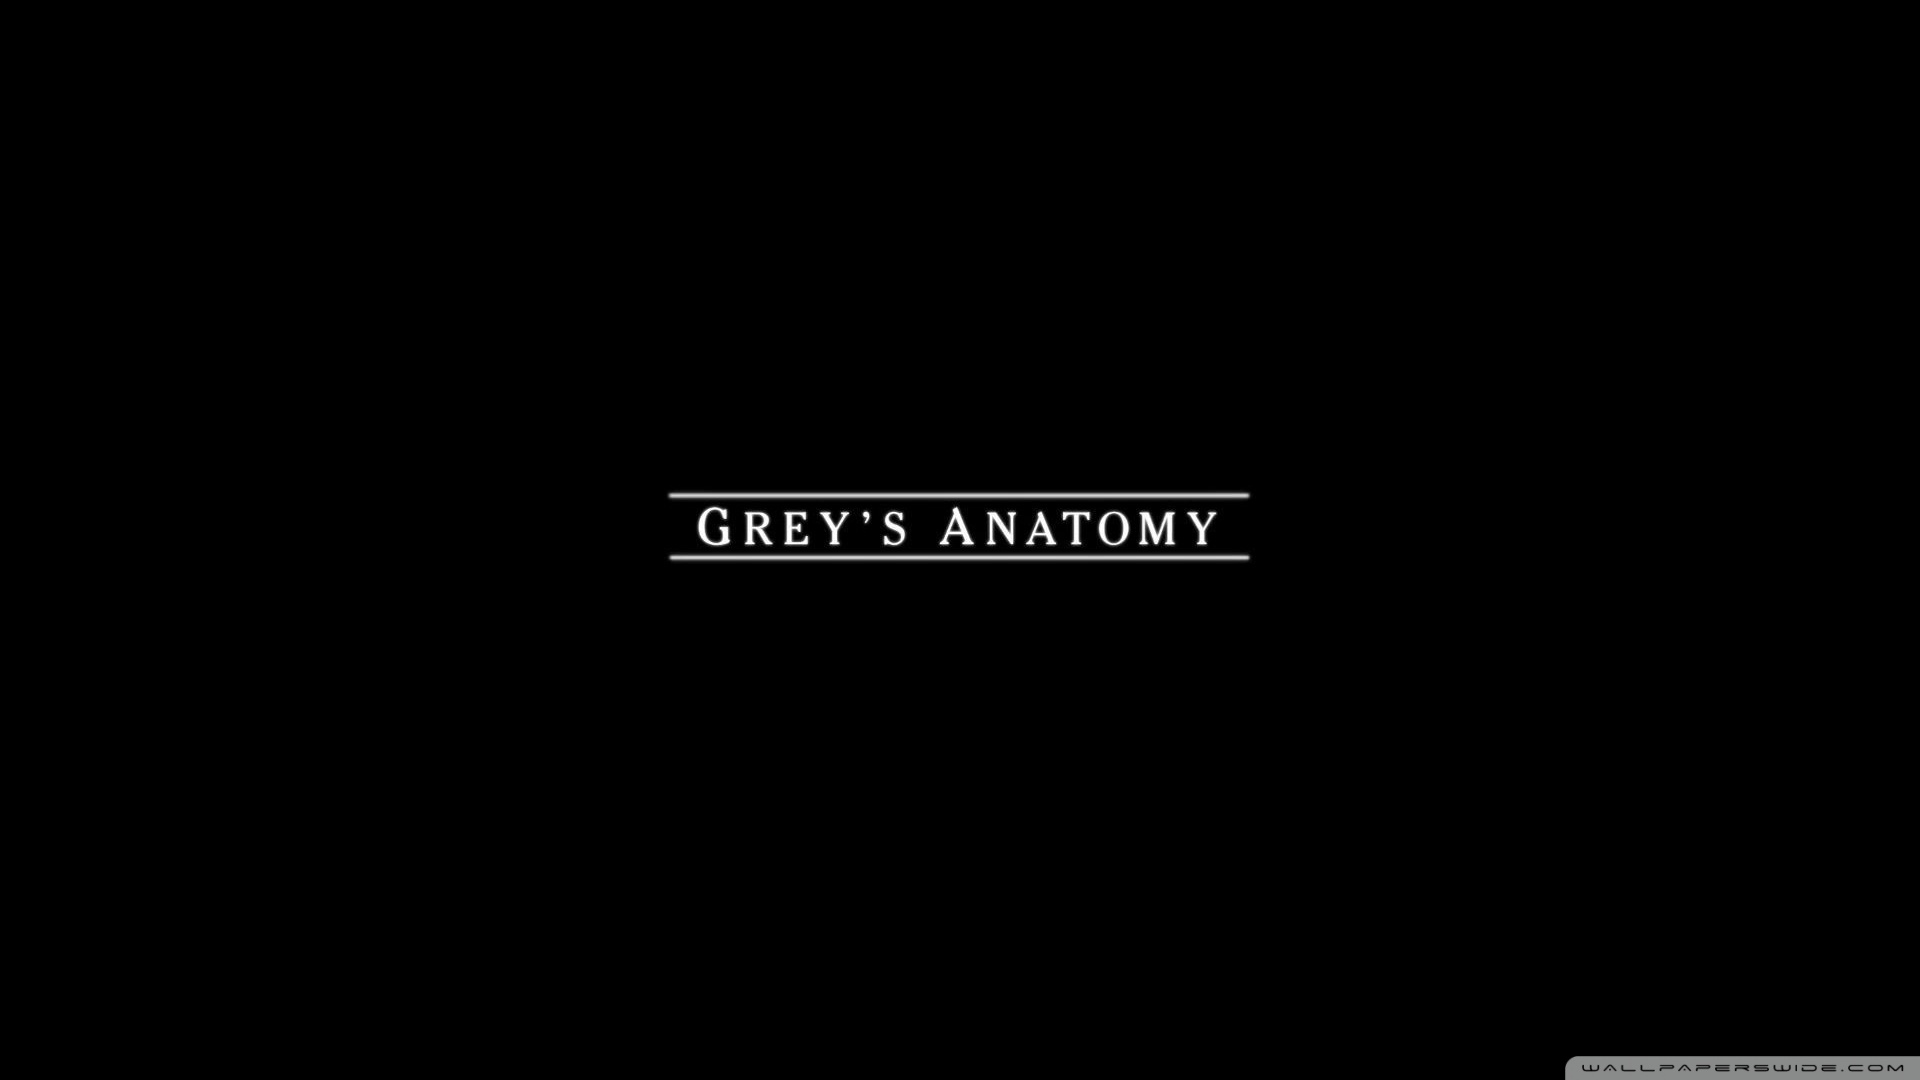 Greys Anatomy Wallpaper 1920x1080